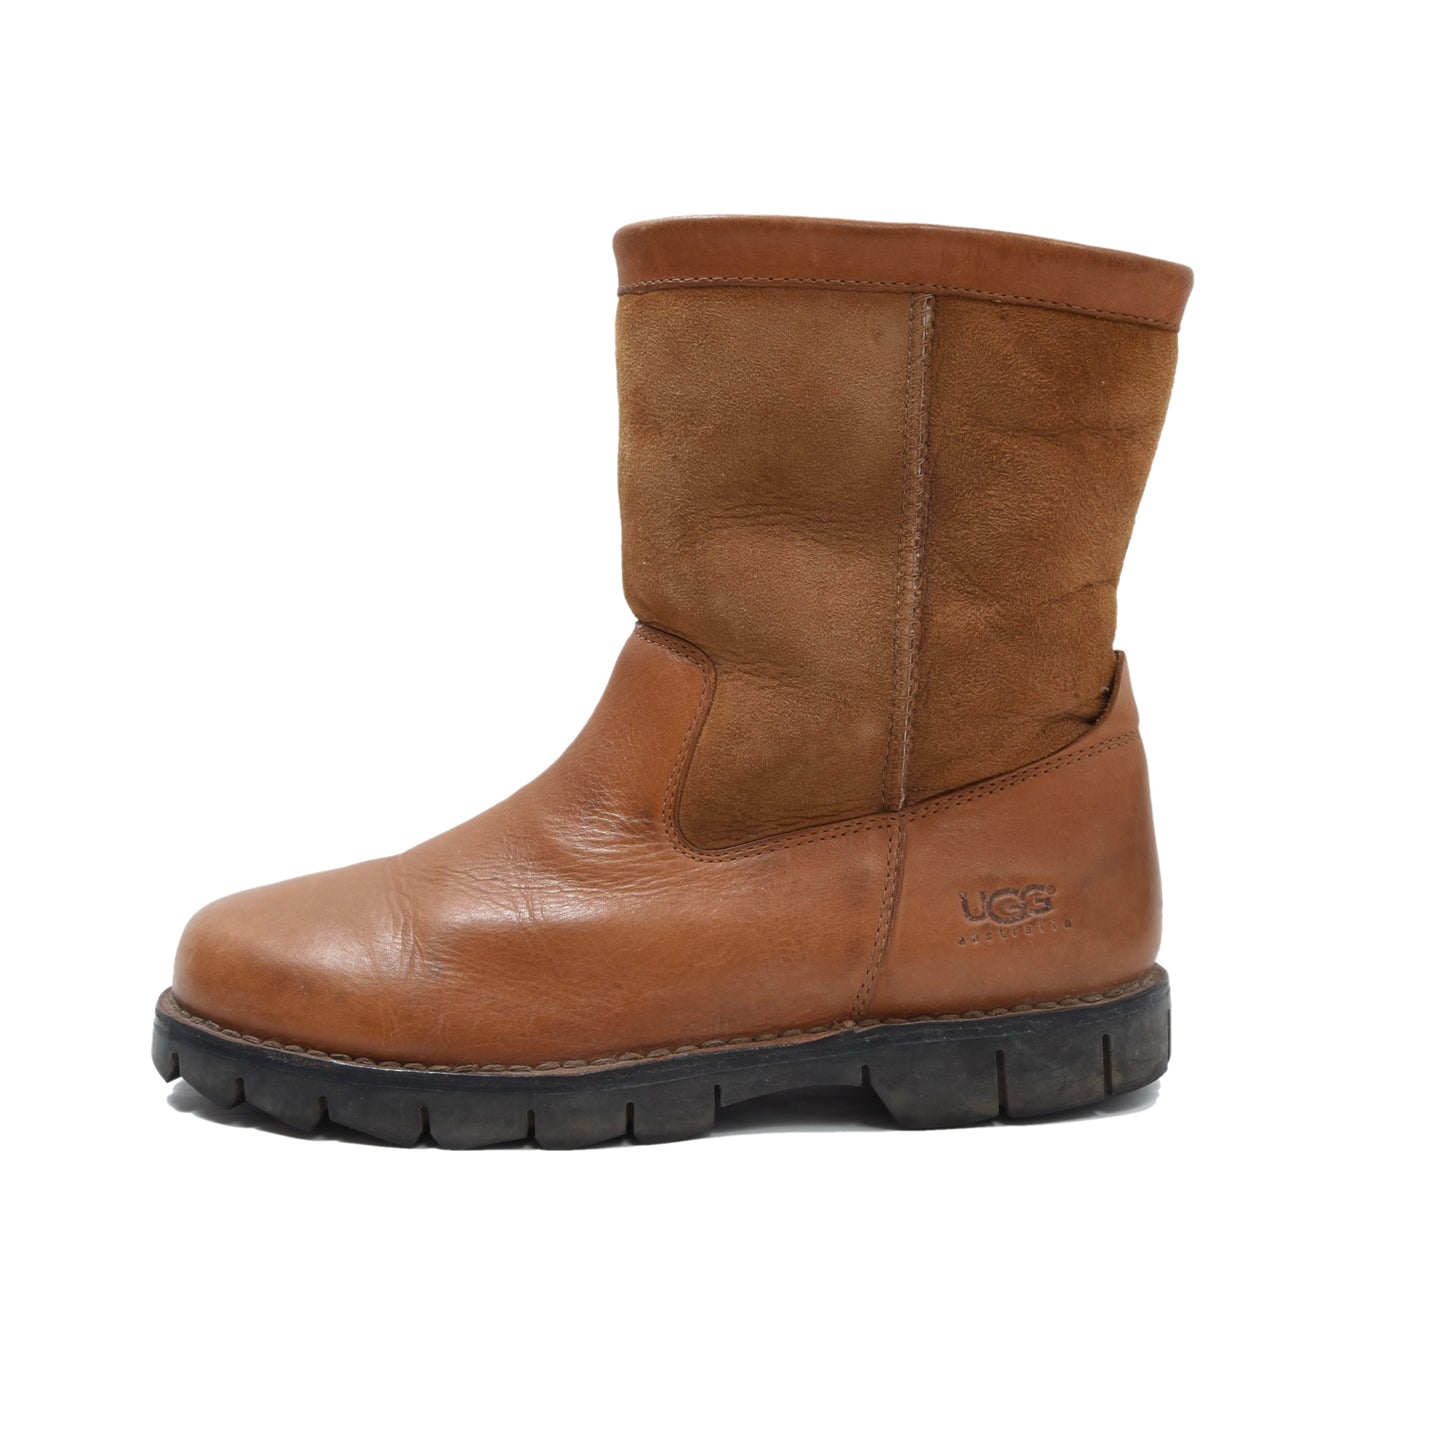 Ugg Shearling Beacon Boots Size EU 42 USA 10 - Tan/Brown